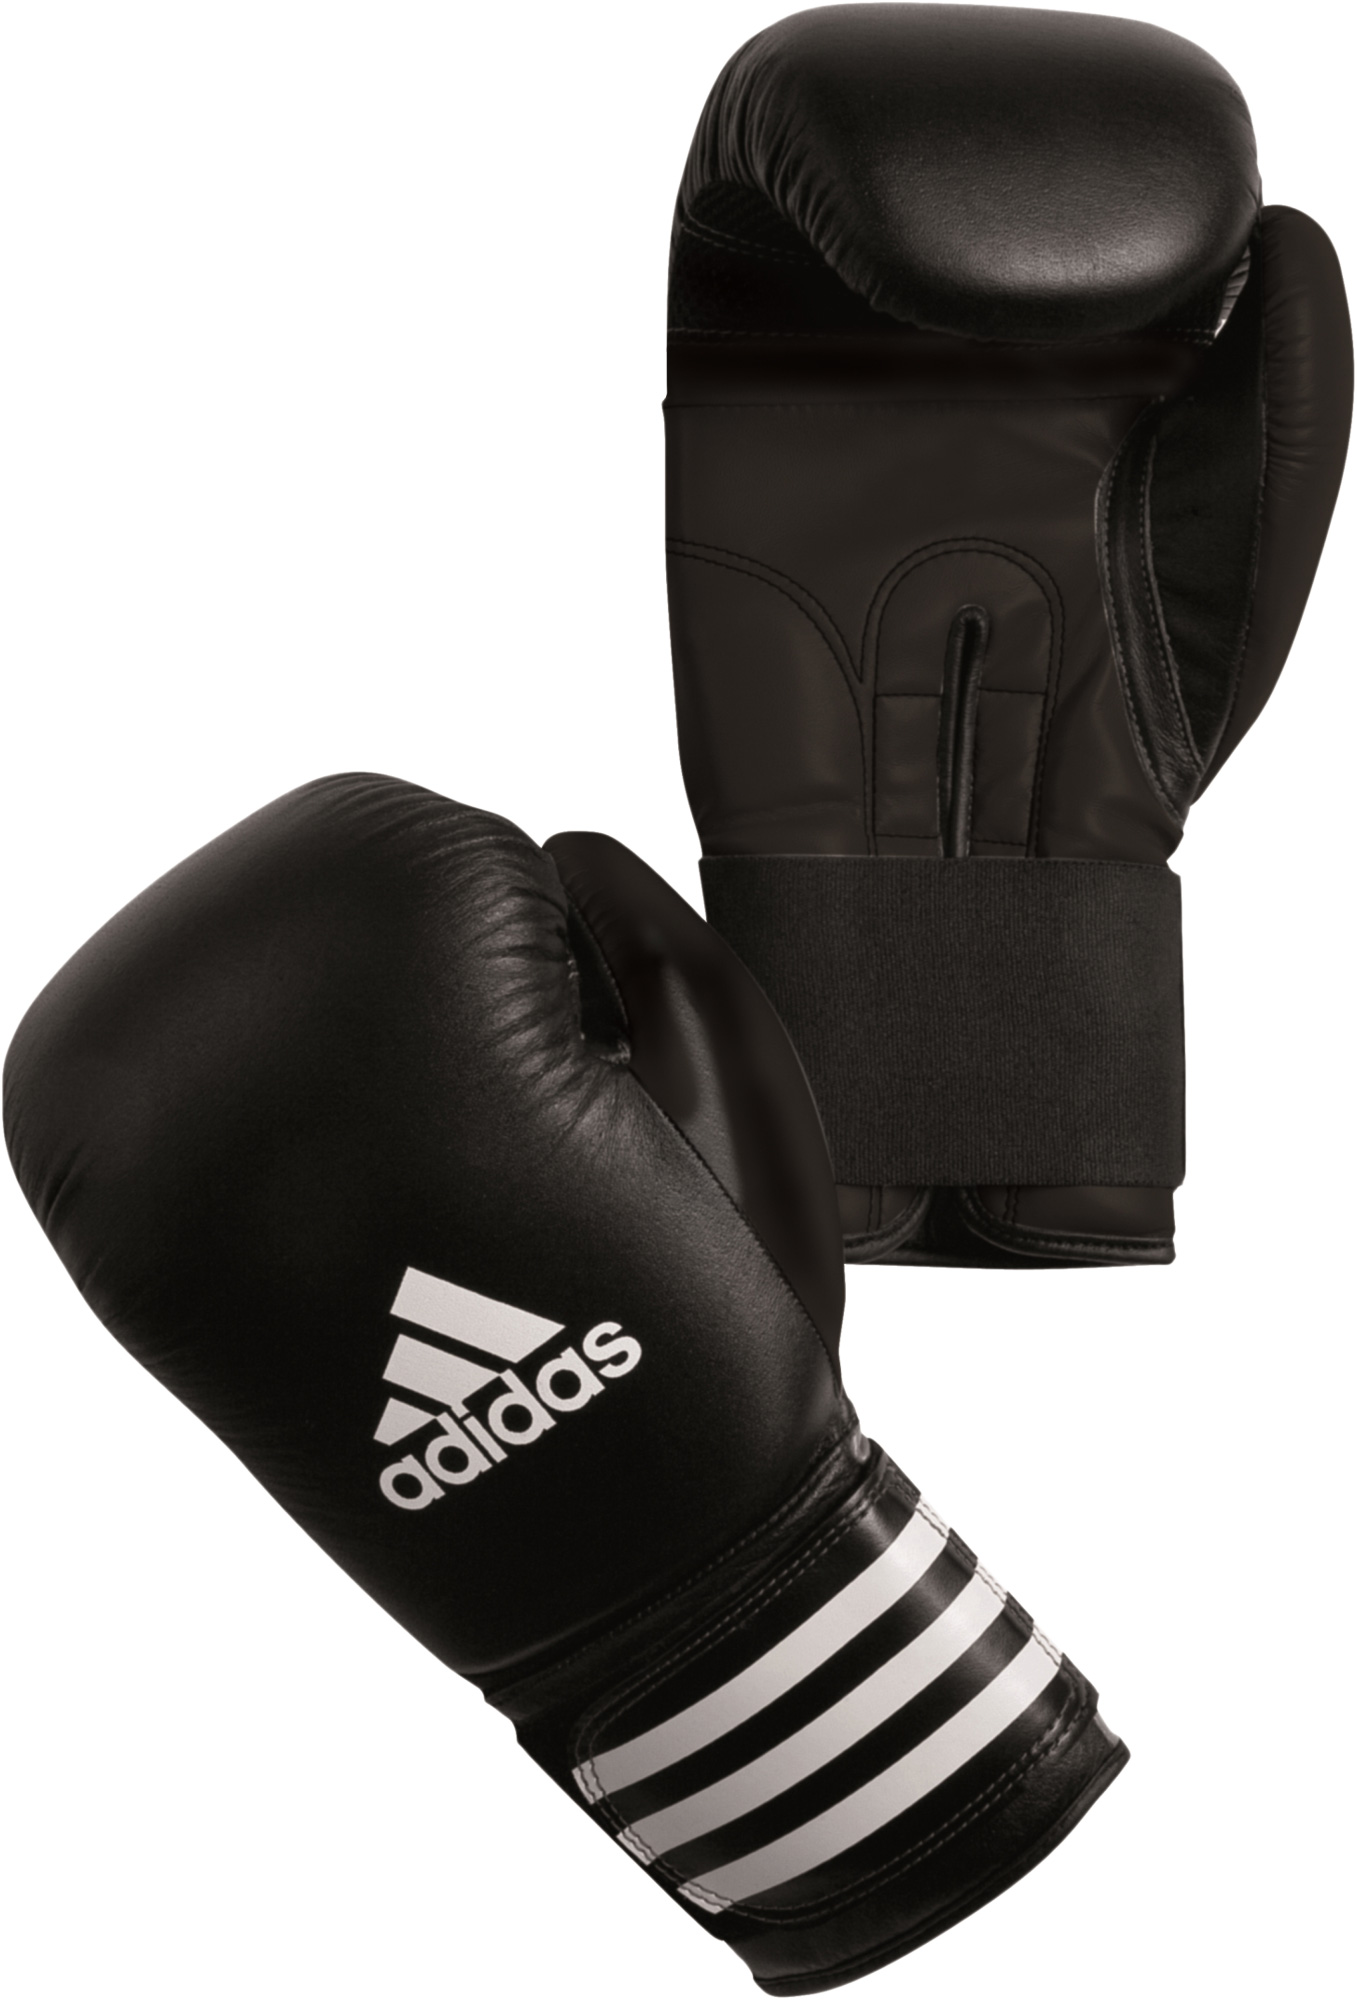 RESPONSE - Boxing Gloves